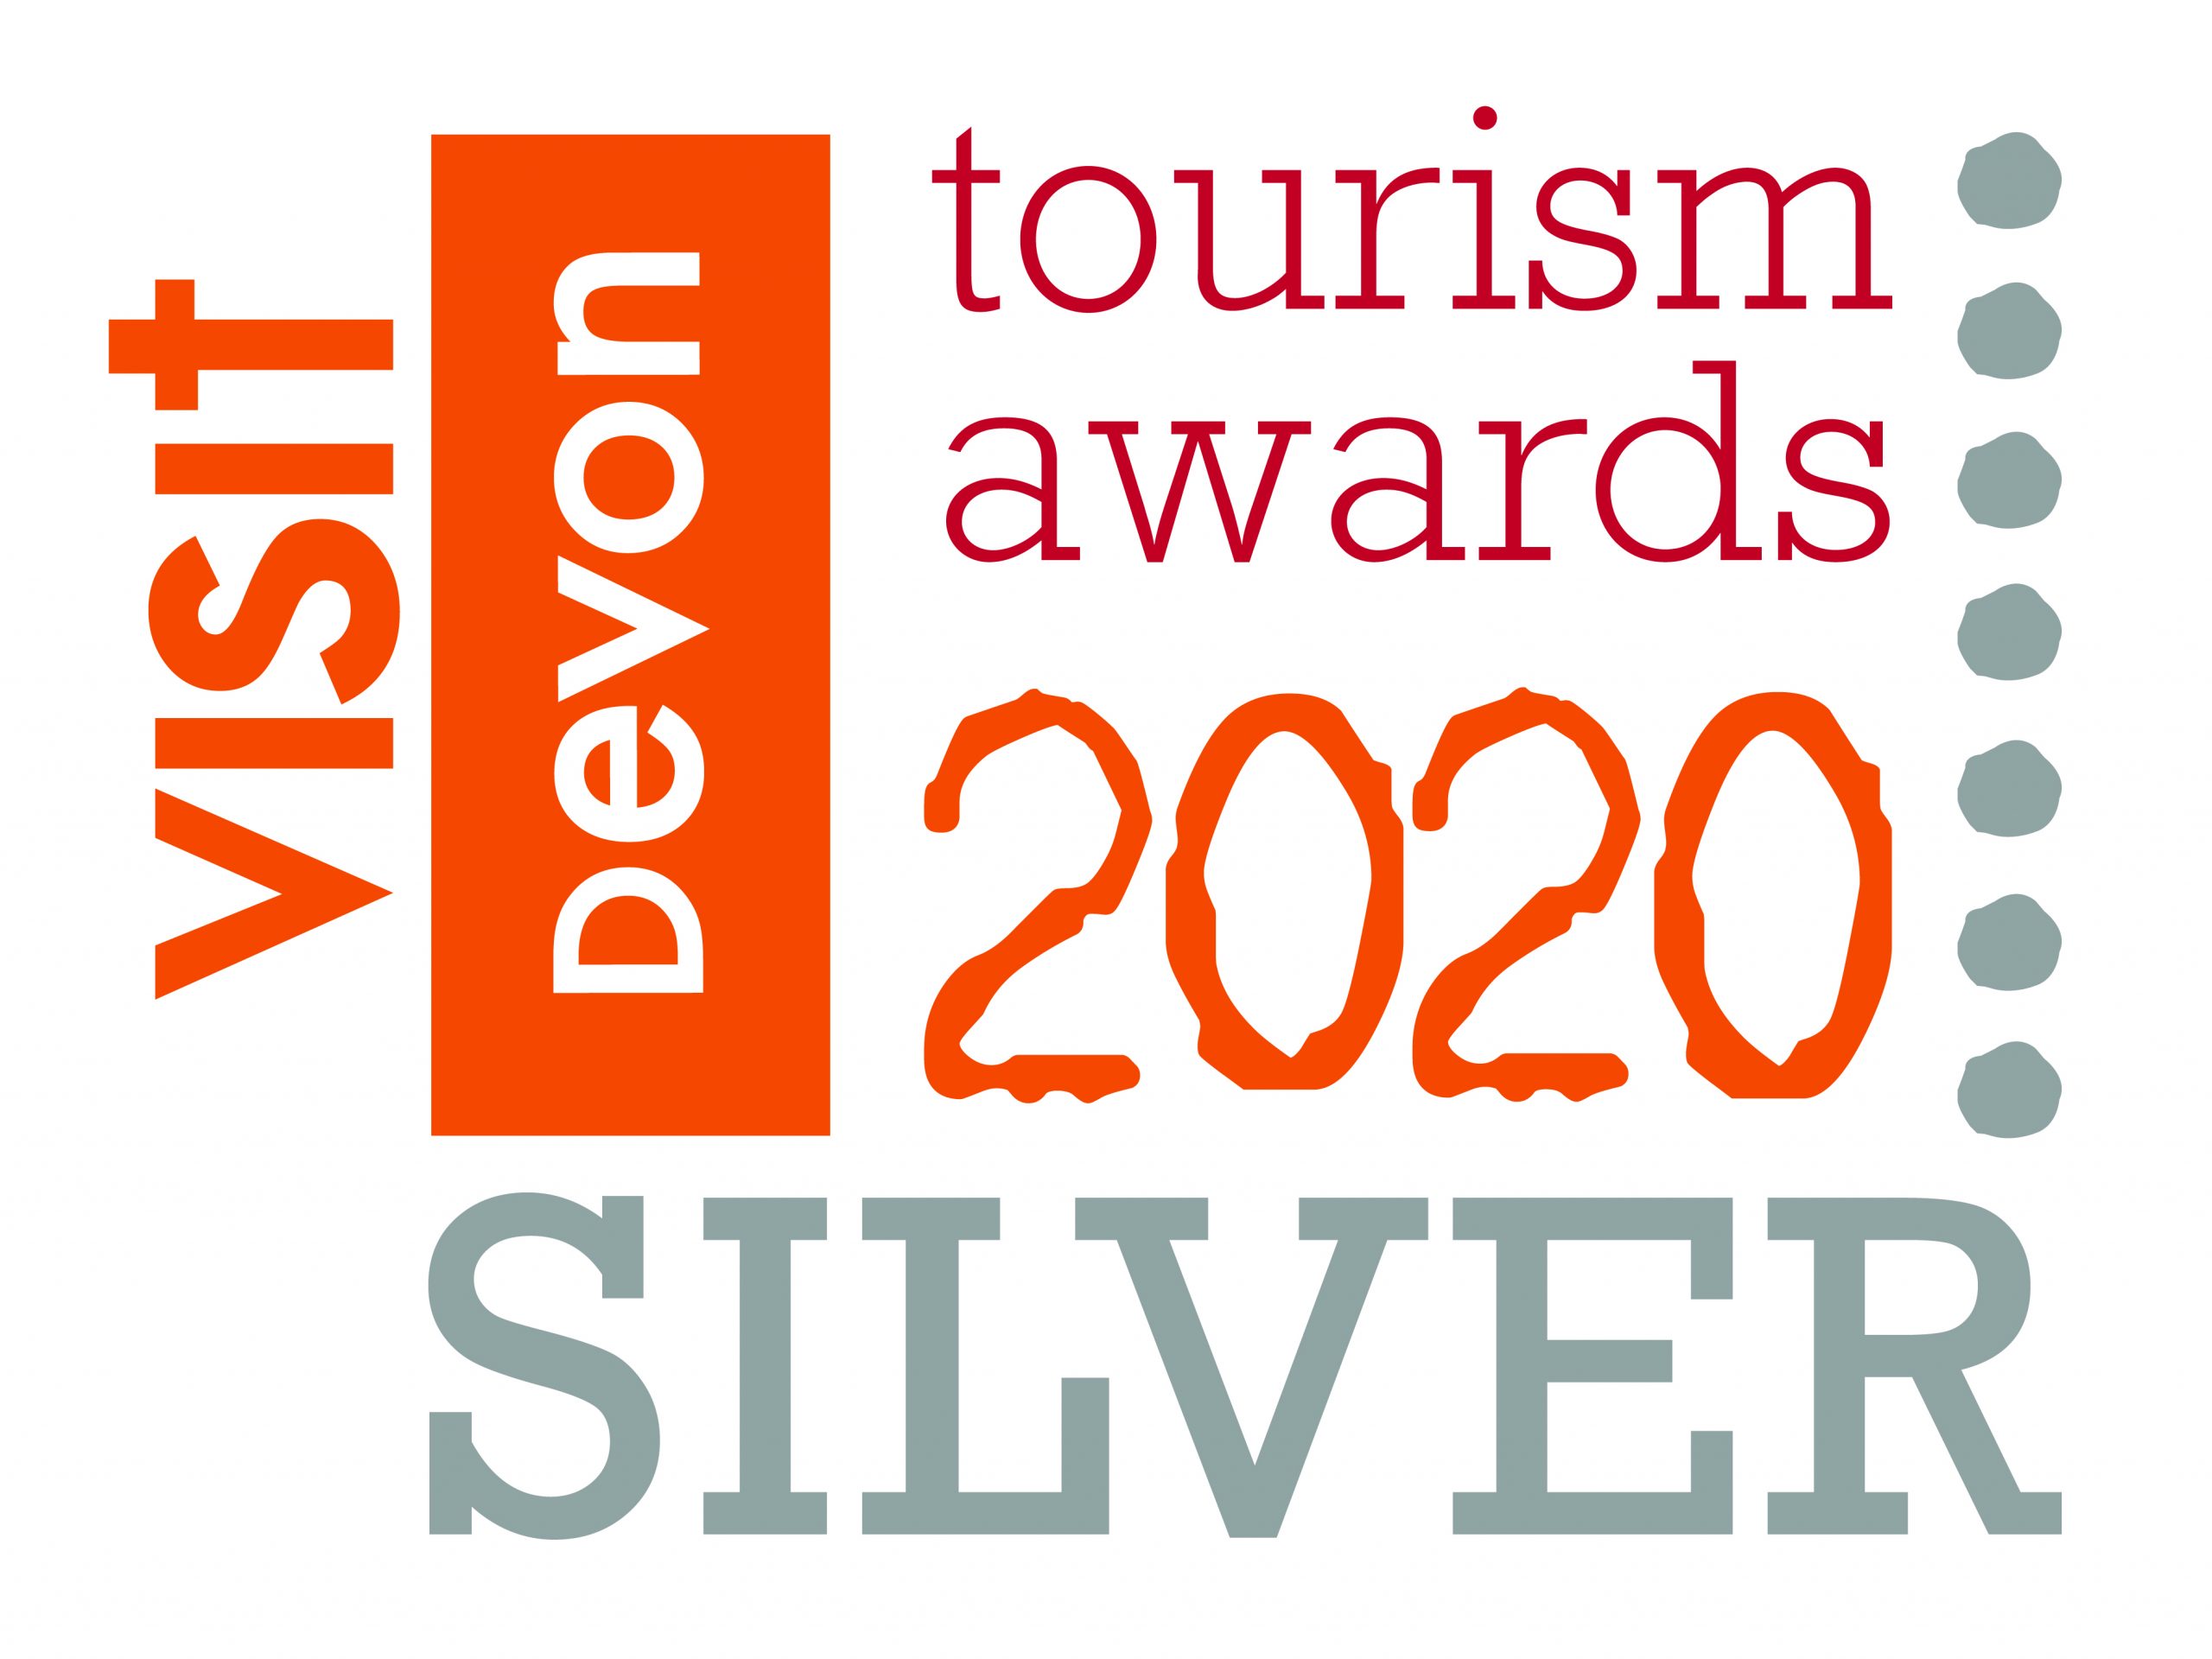 Exmoor tourism awards